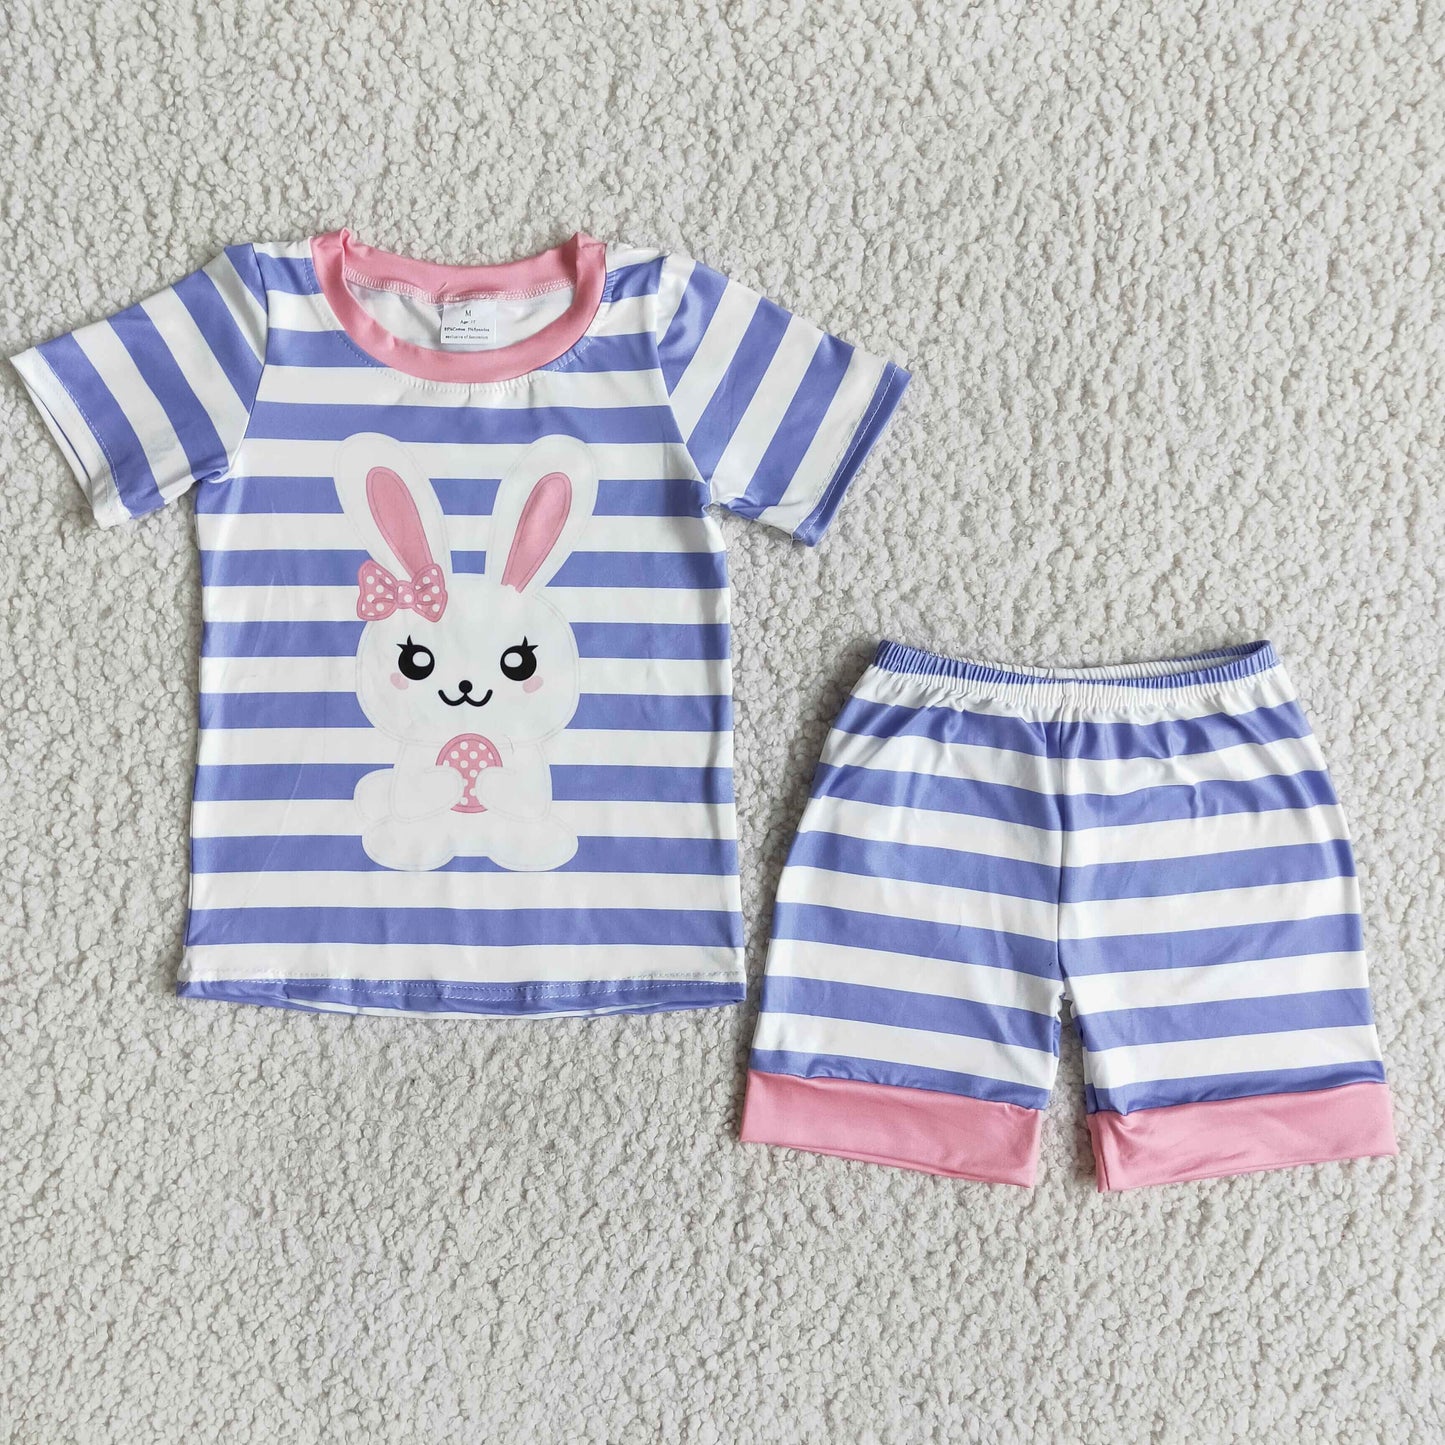 E7-17 Pink bunny blue striped suit